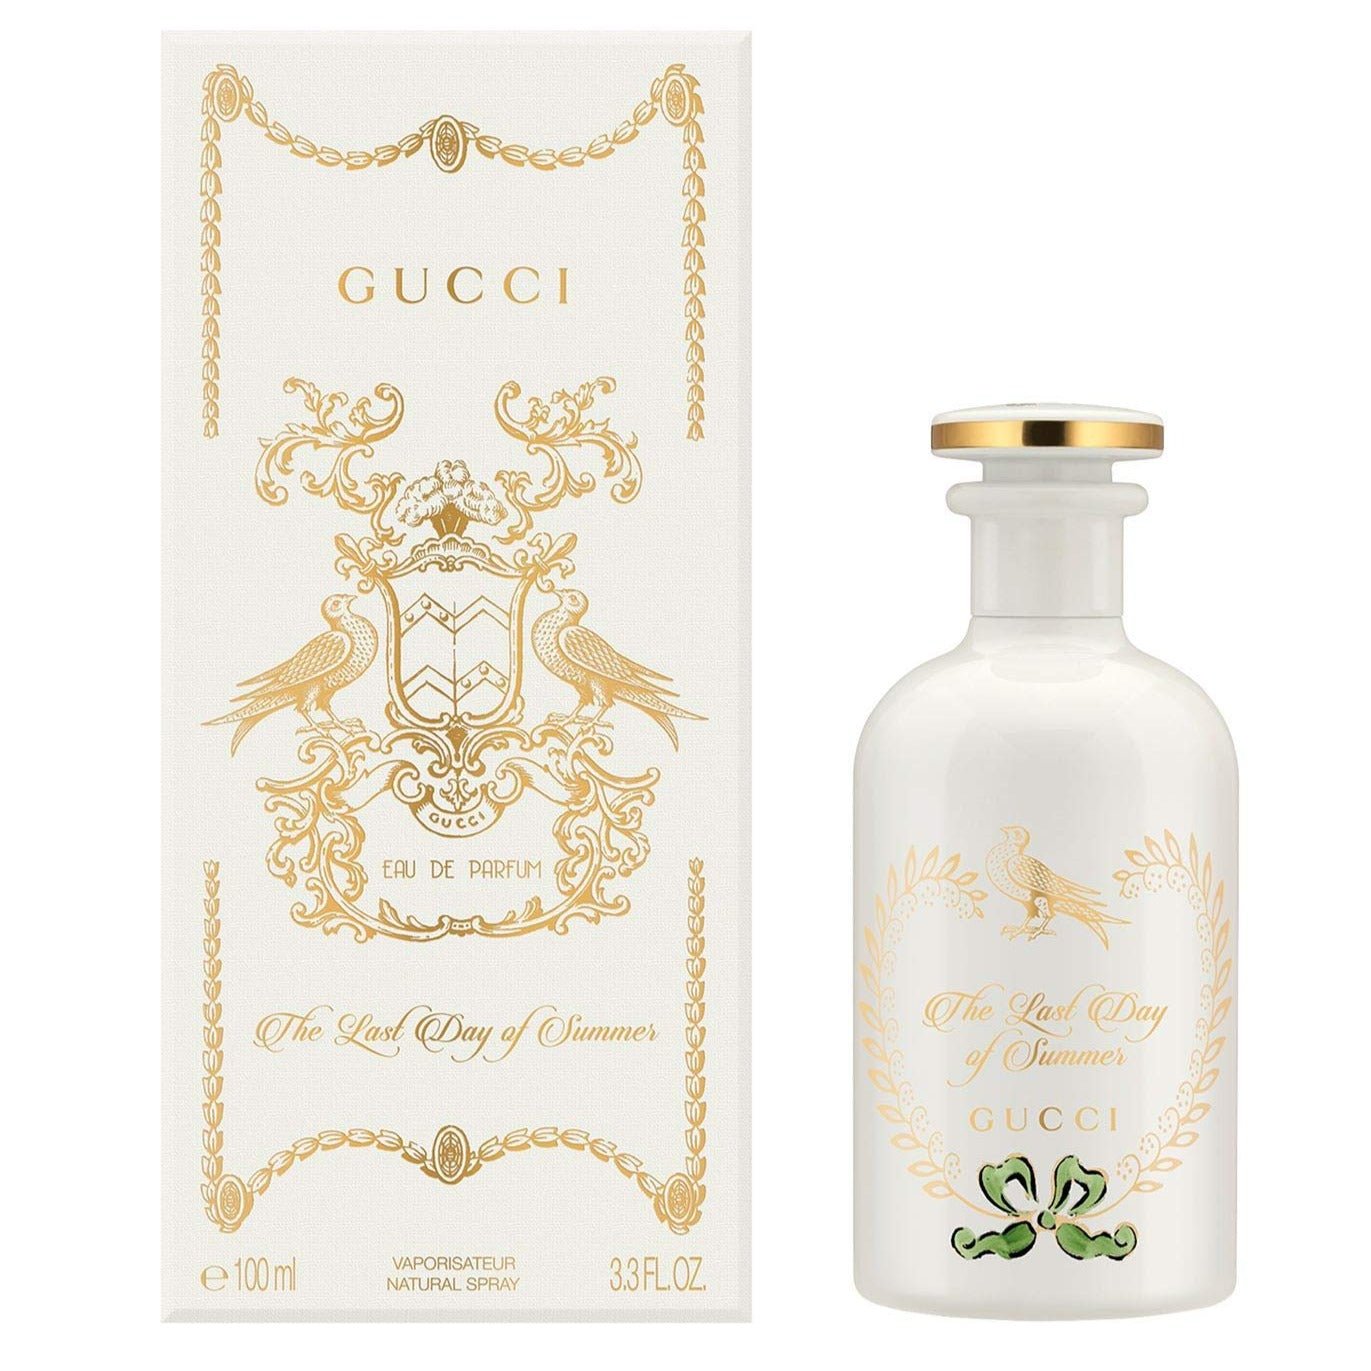 Gucci The Alchemist's Garden The Last Day Of Summer EDP | My Perfume Shop Australia